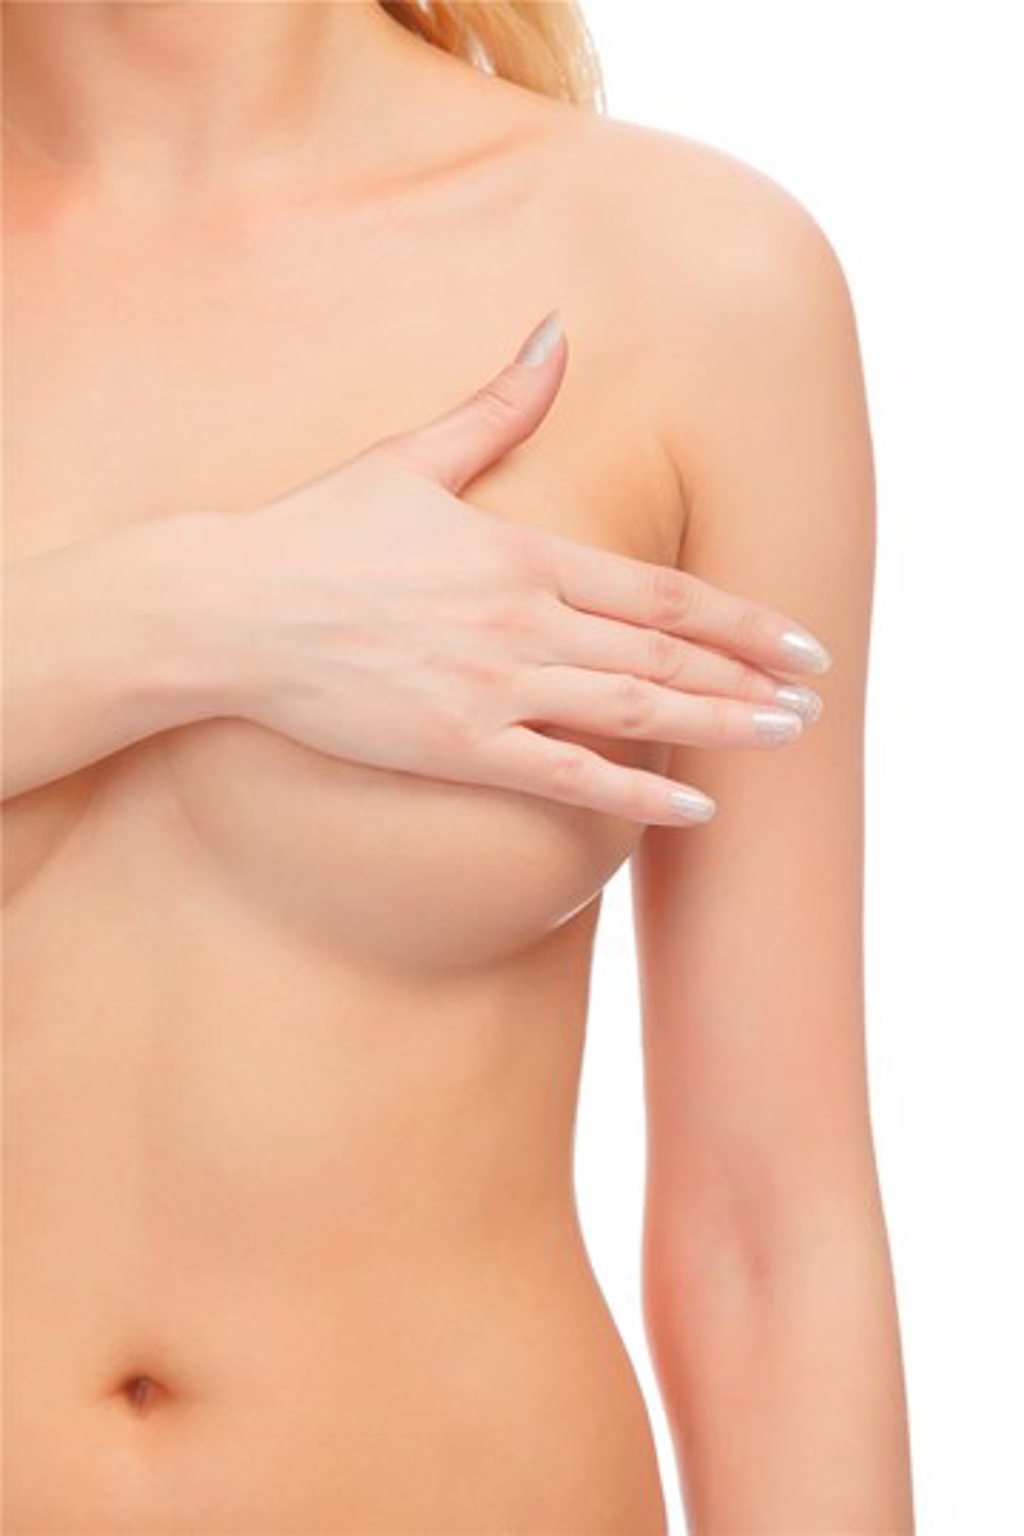 Breast Surgery Treatments